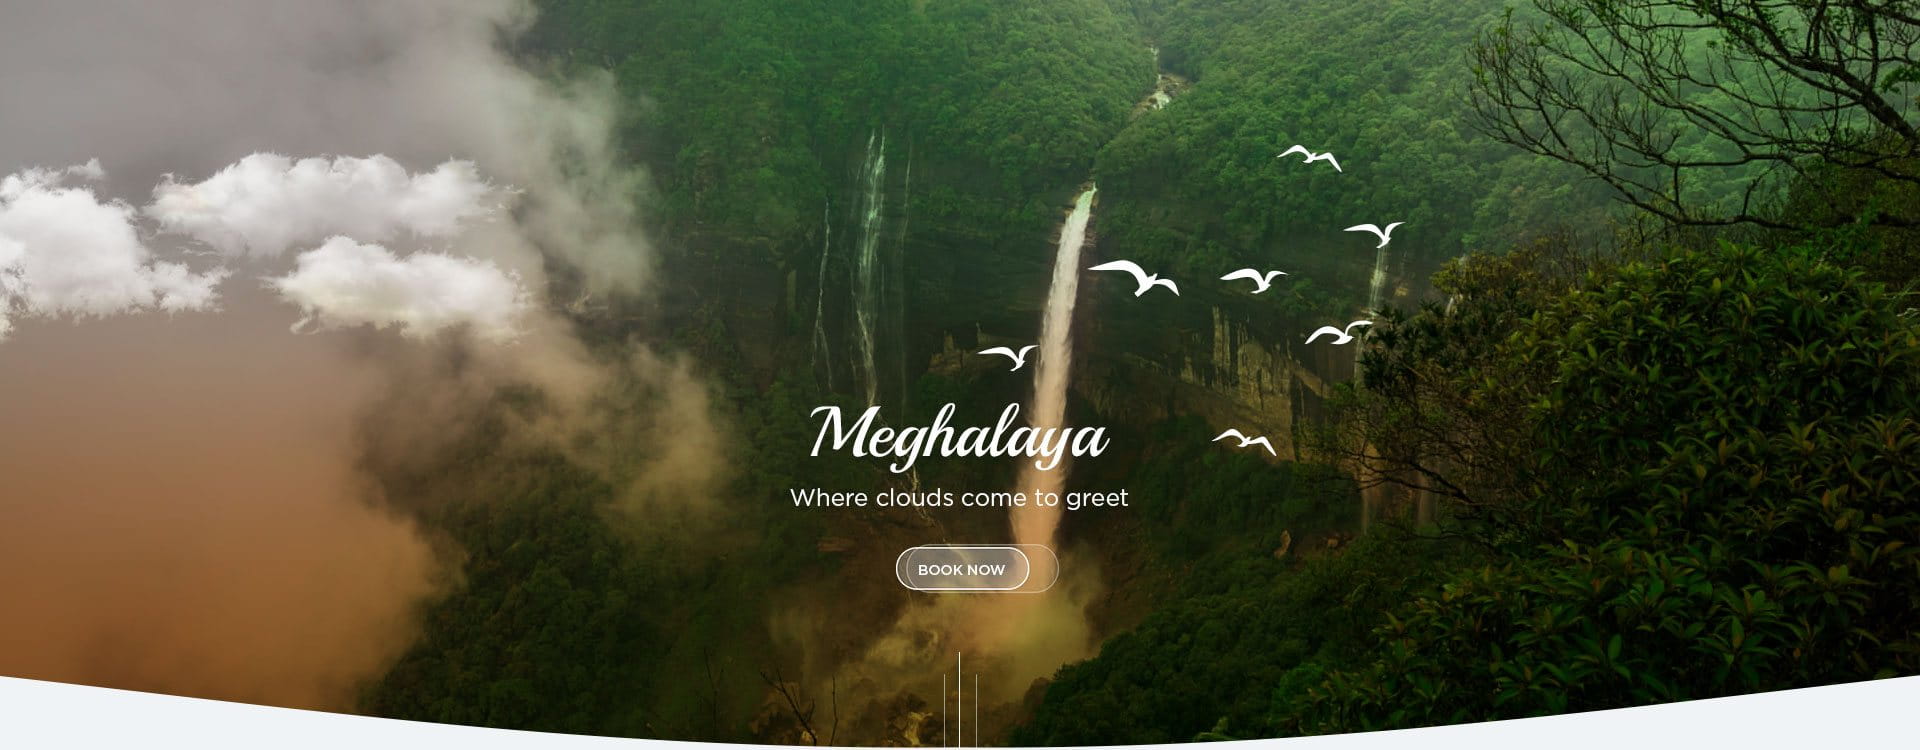 Meghalaya Tours and travel - Eastern Meadows Tour